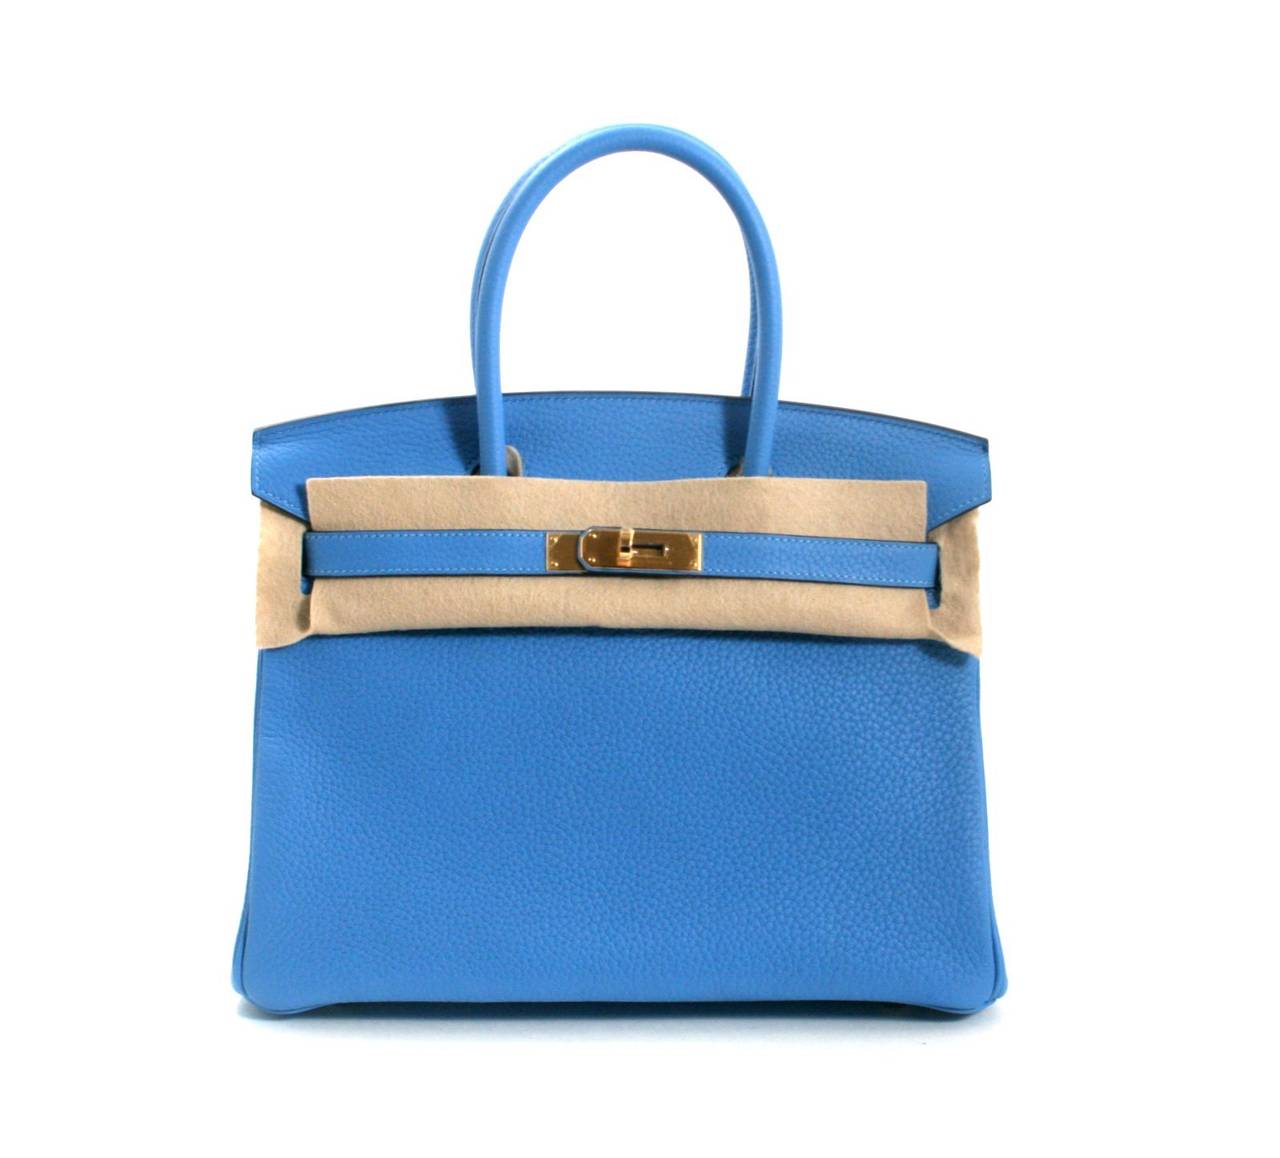 Hermès 30 cm Bleu Paradis Clemence Birkin Bag with GHW 6